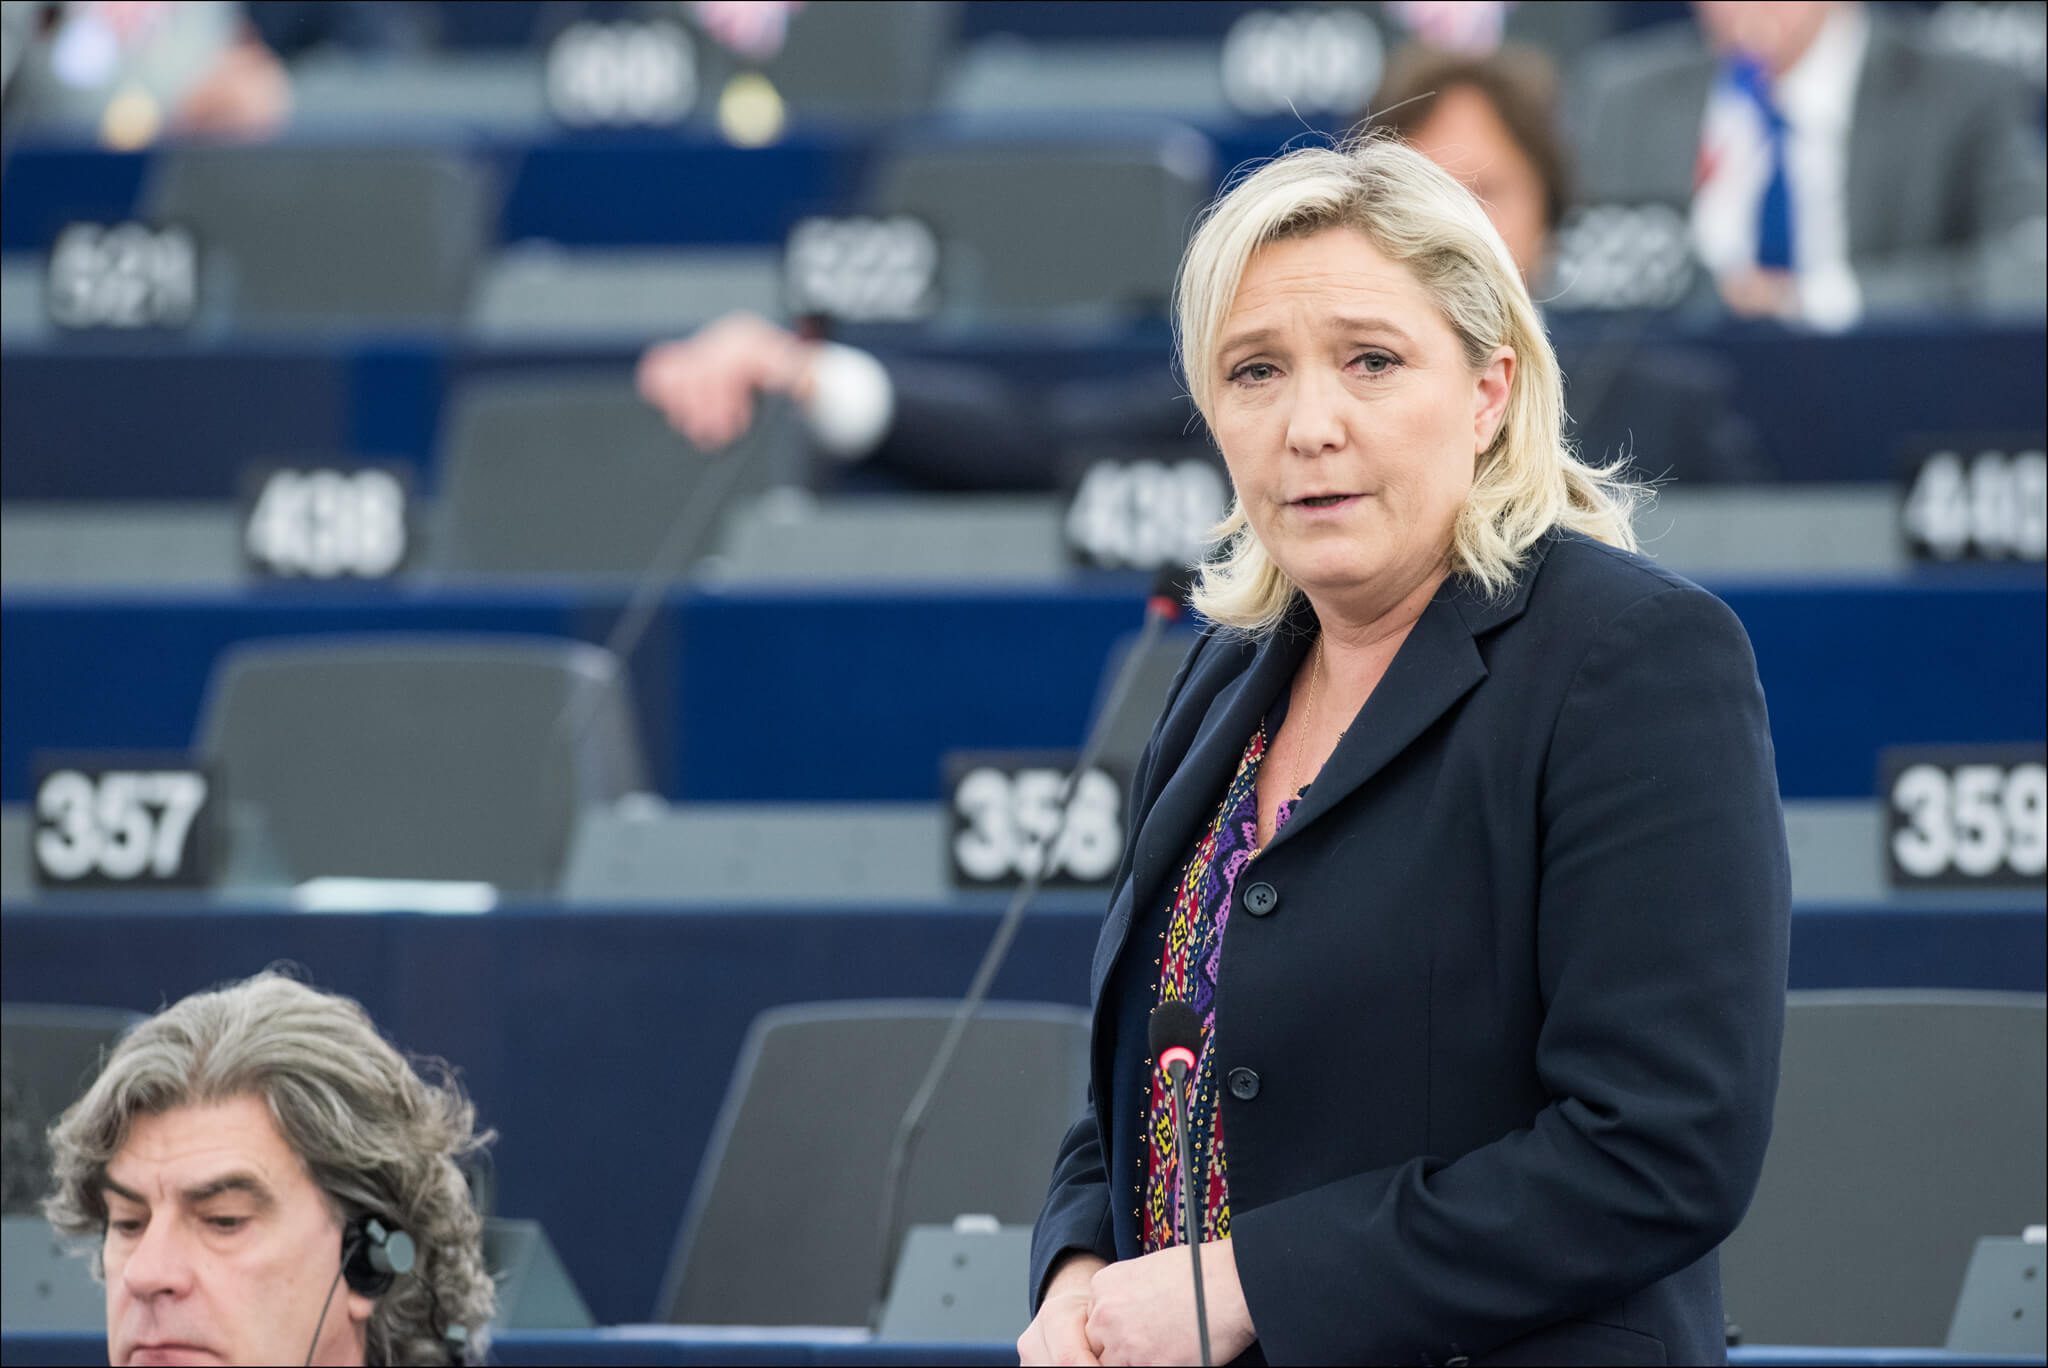 Marine Le Pen in het Europees Parlement in 2015.  © European Union 2015 / European Parliament